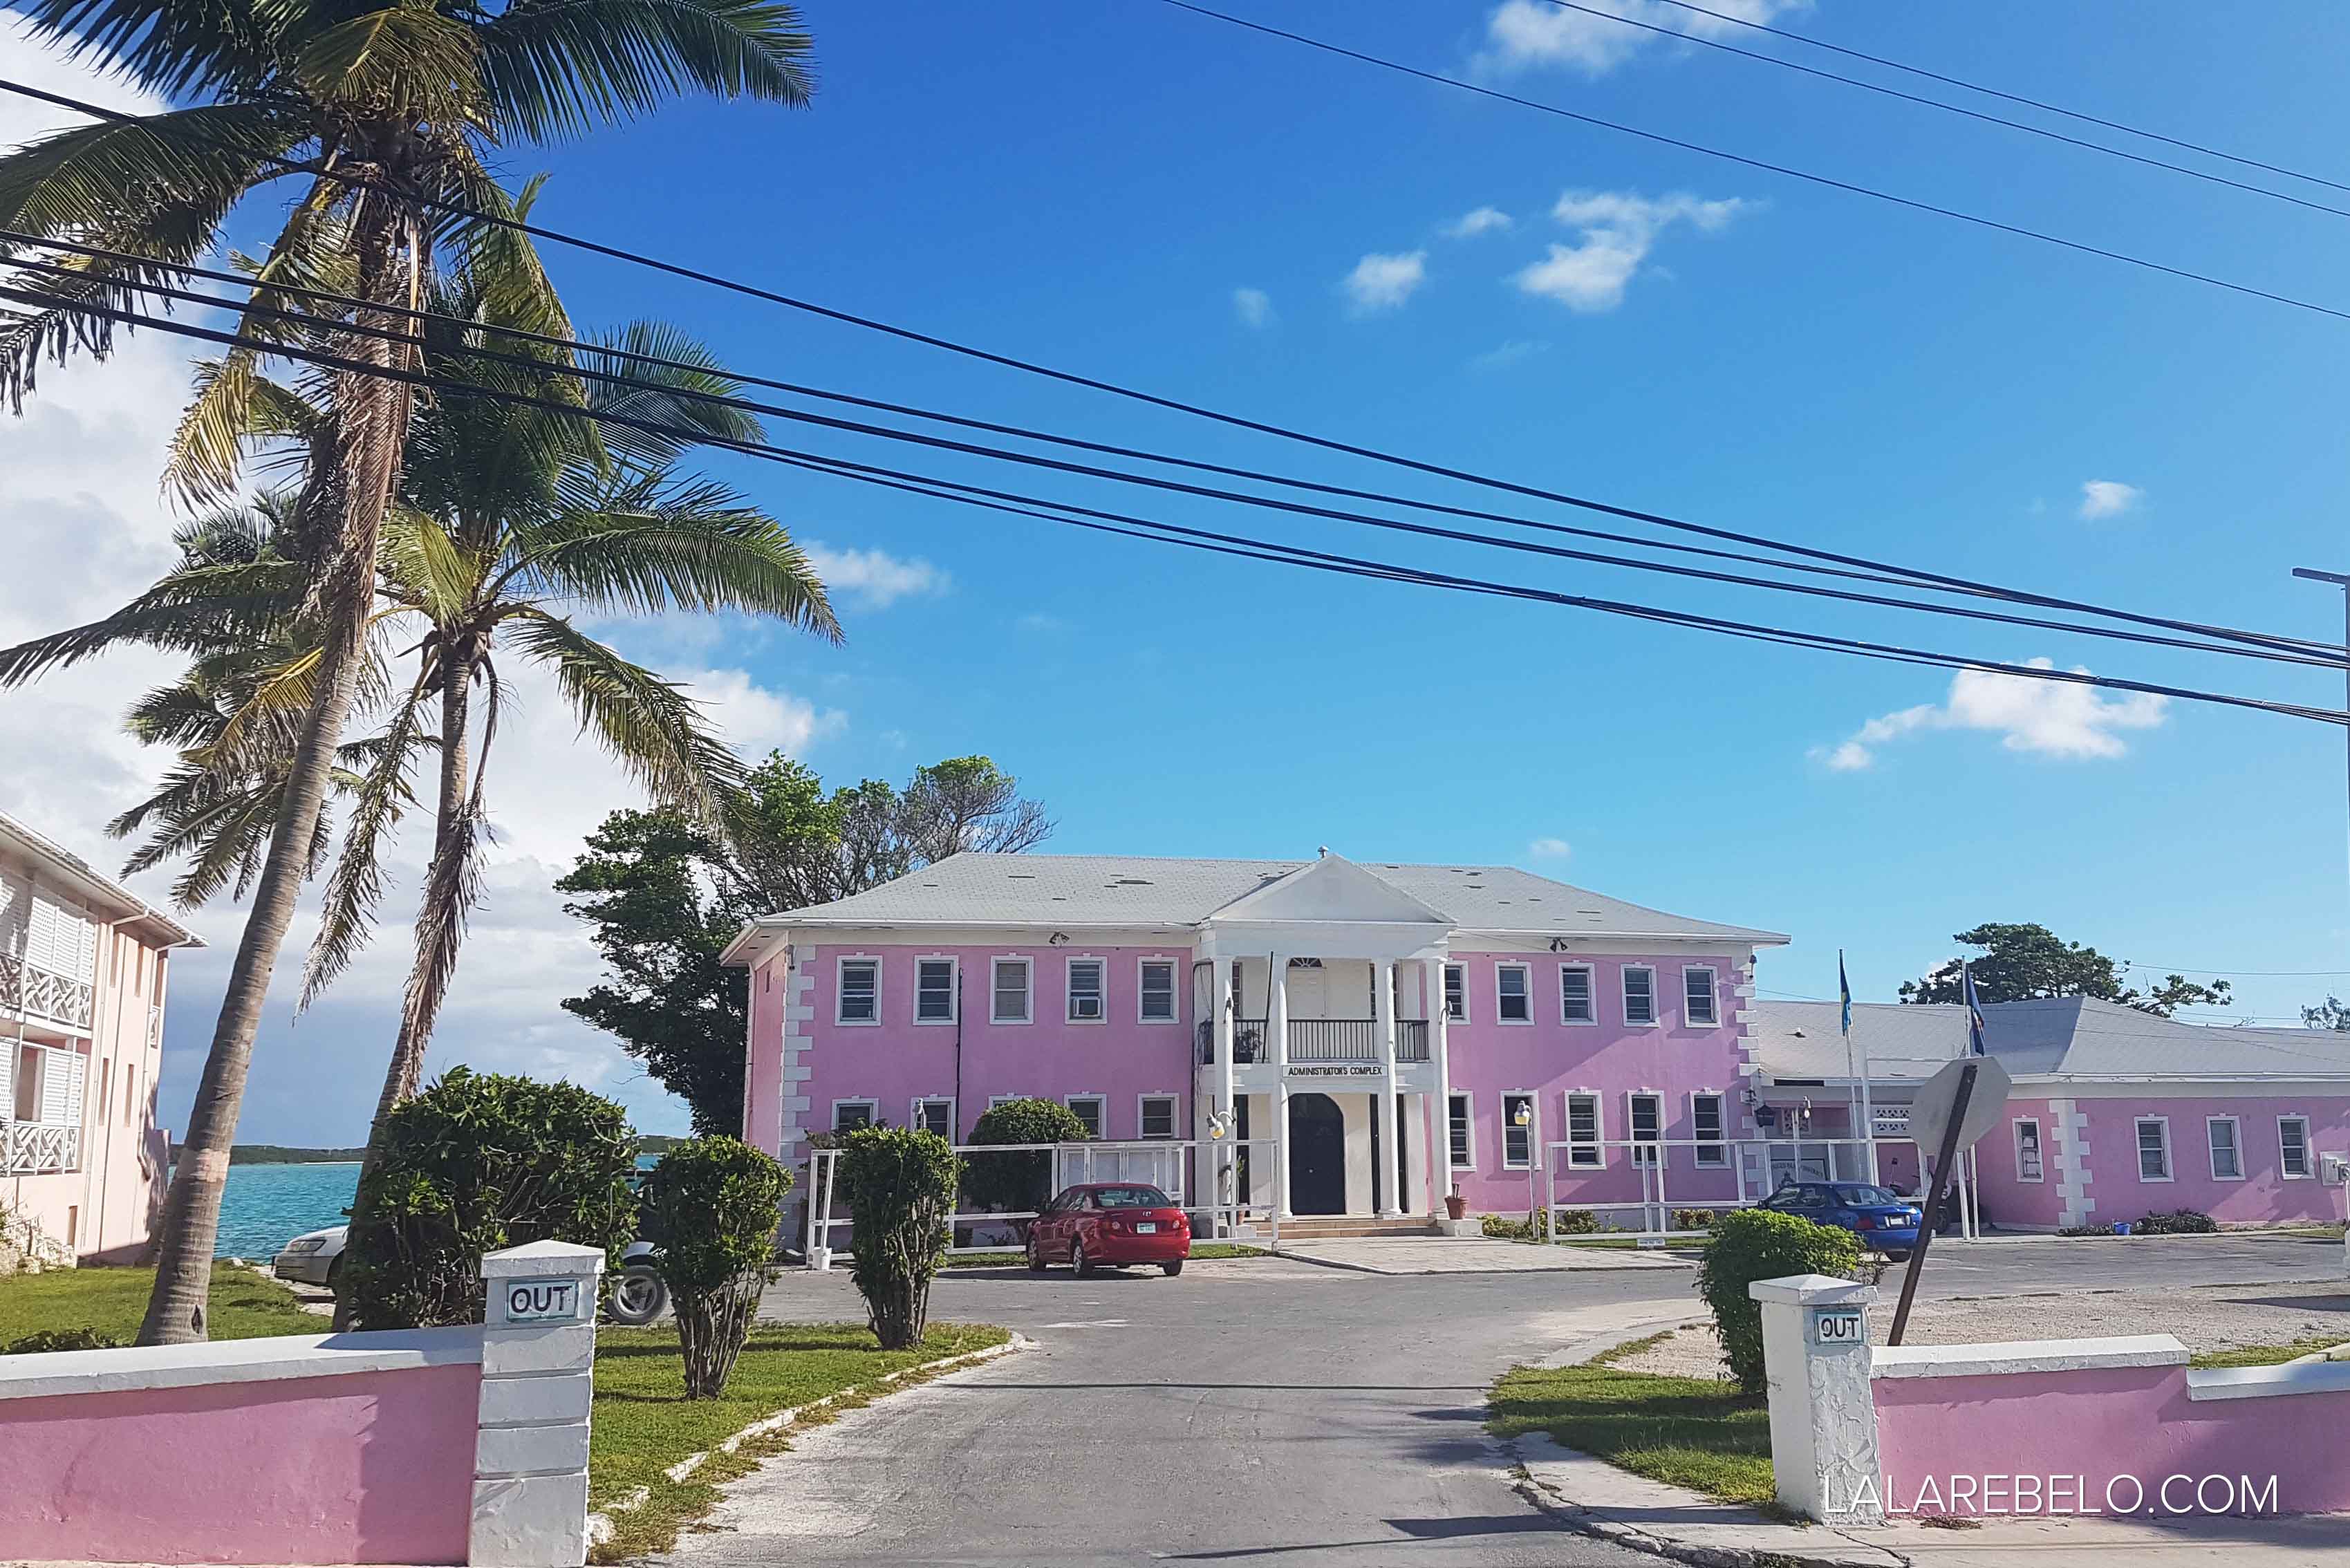 George Town - Great Exuma - Bahamas